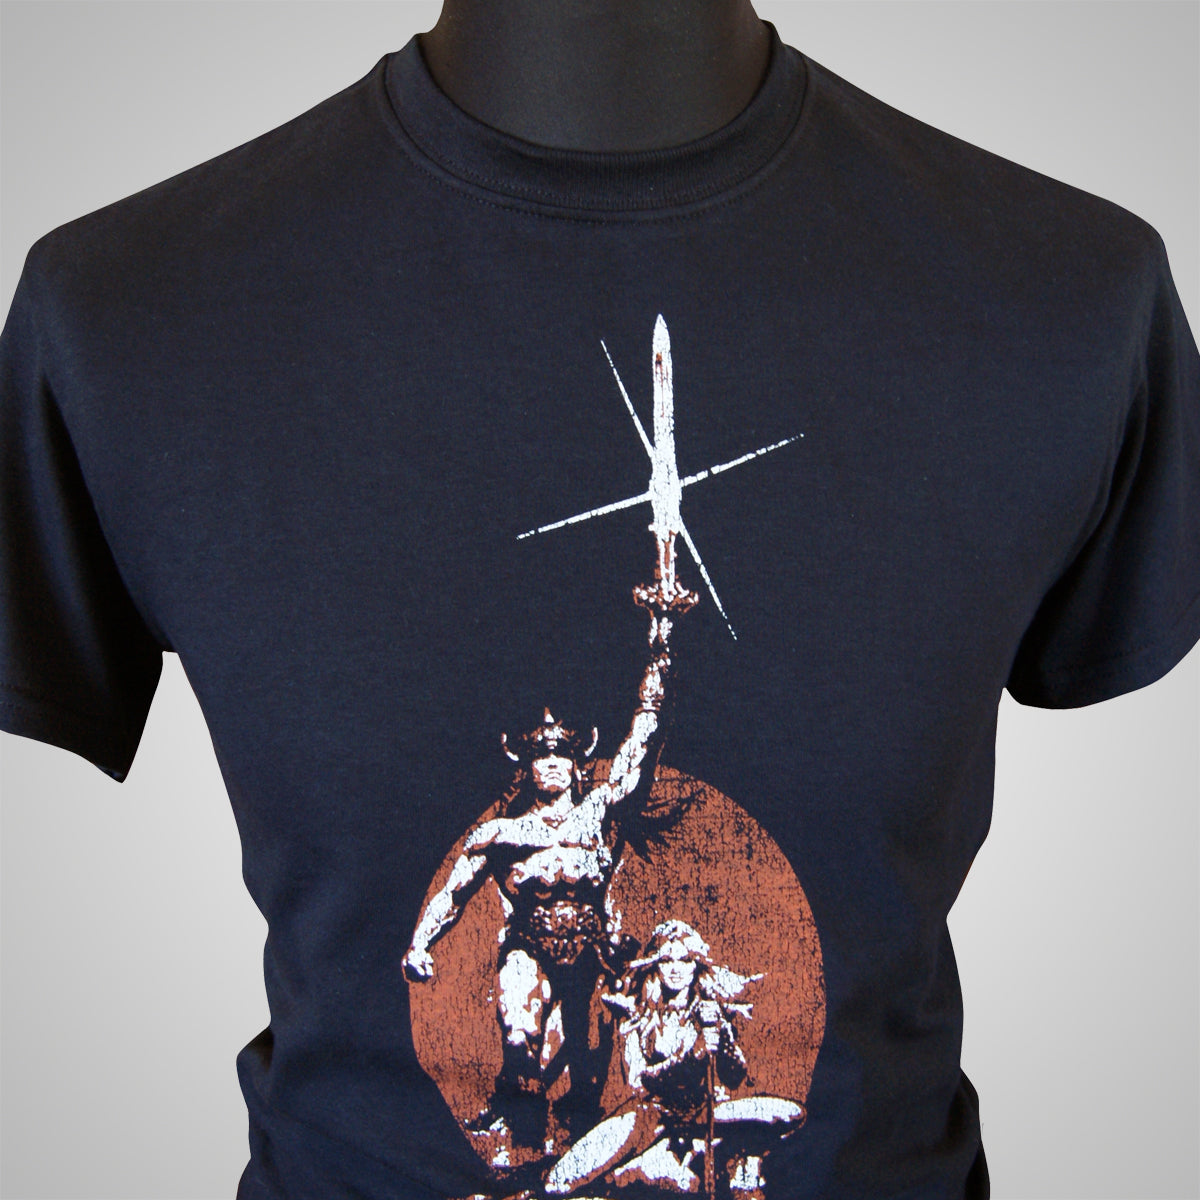 Conan The Barbarian T Shirt (Colour Options)